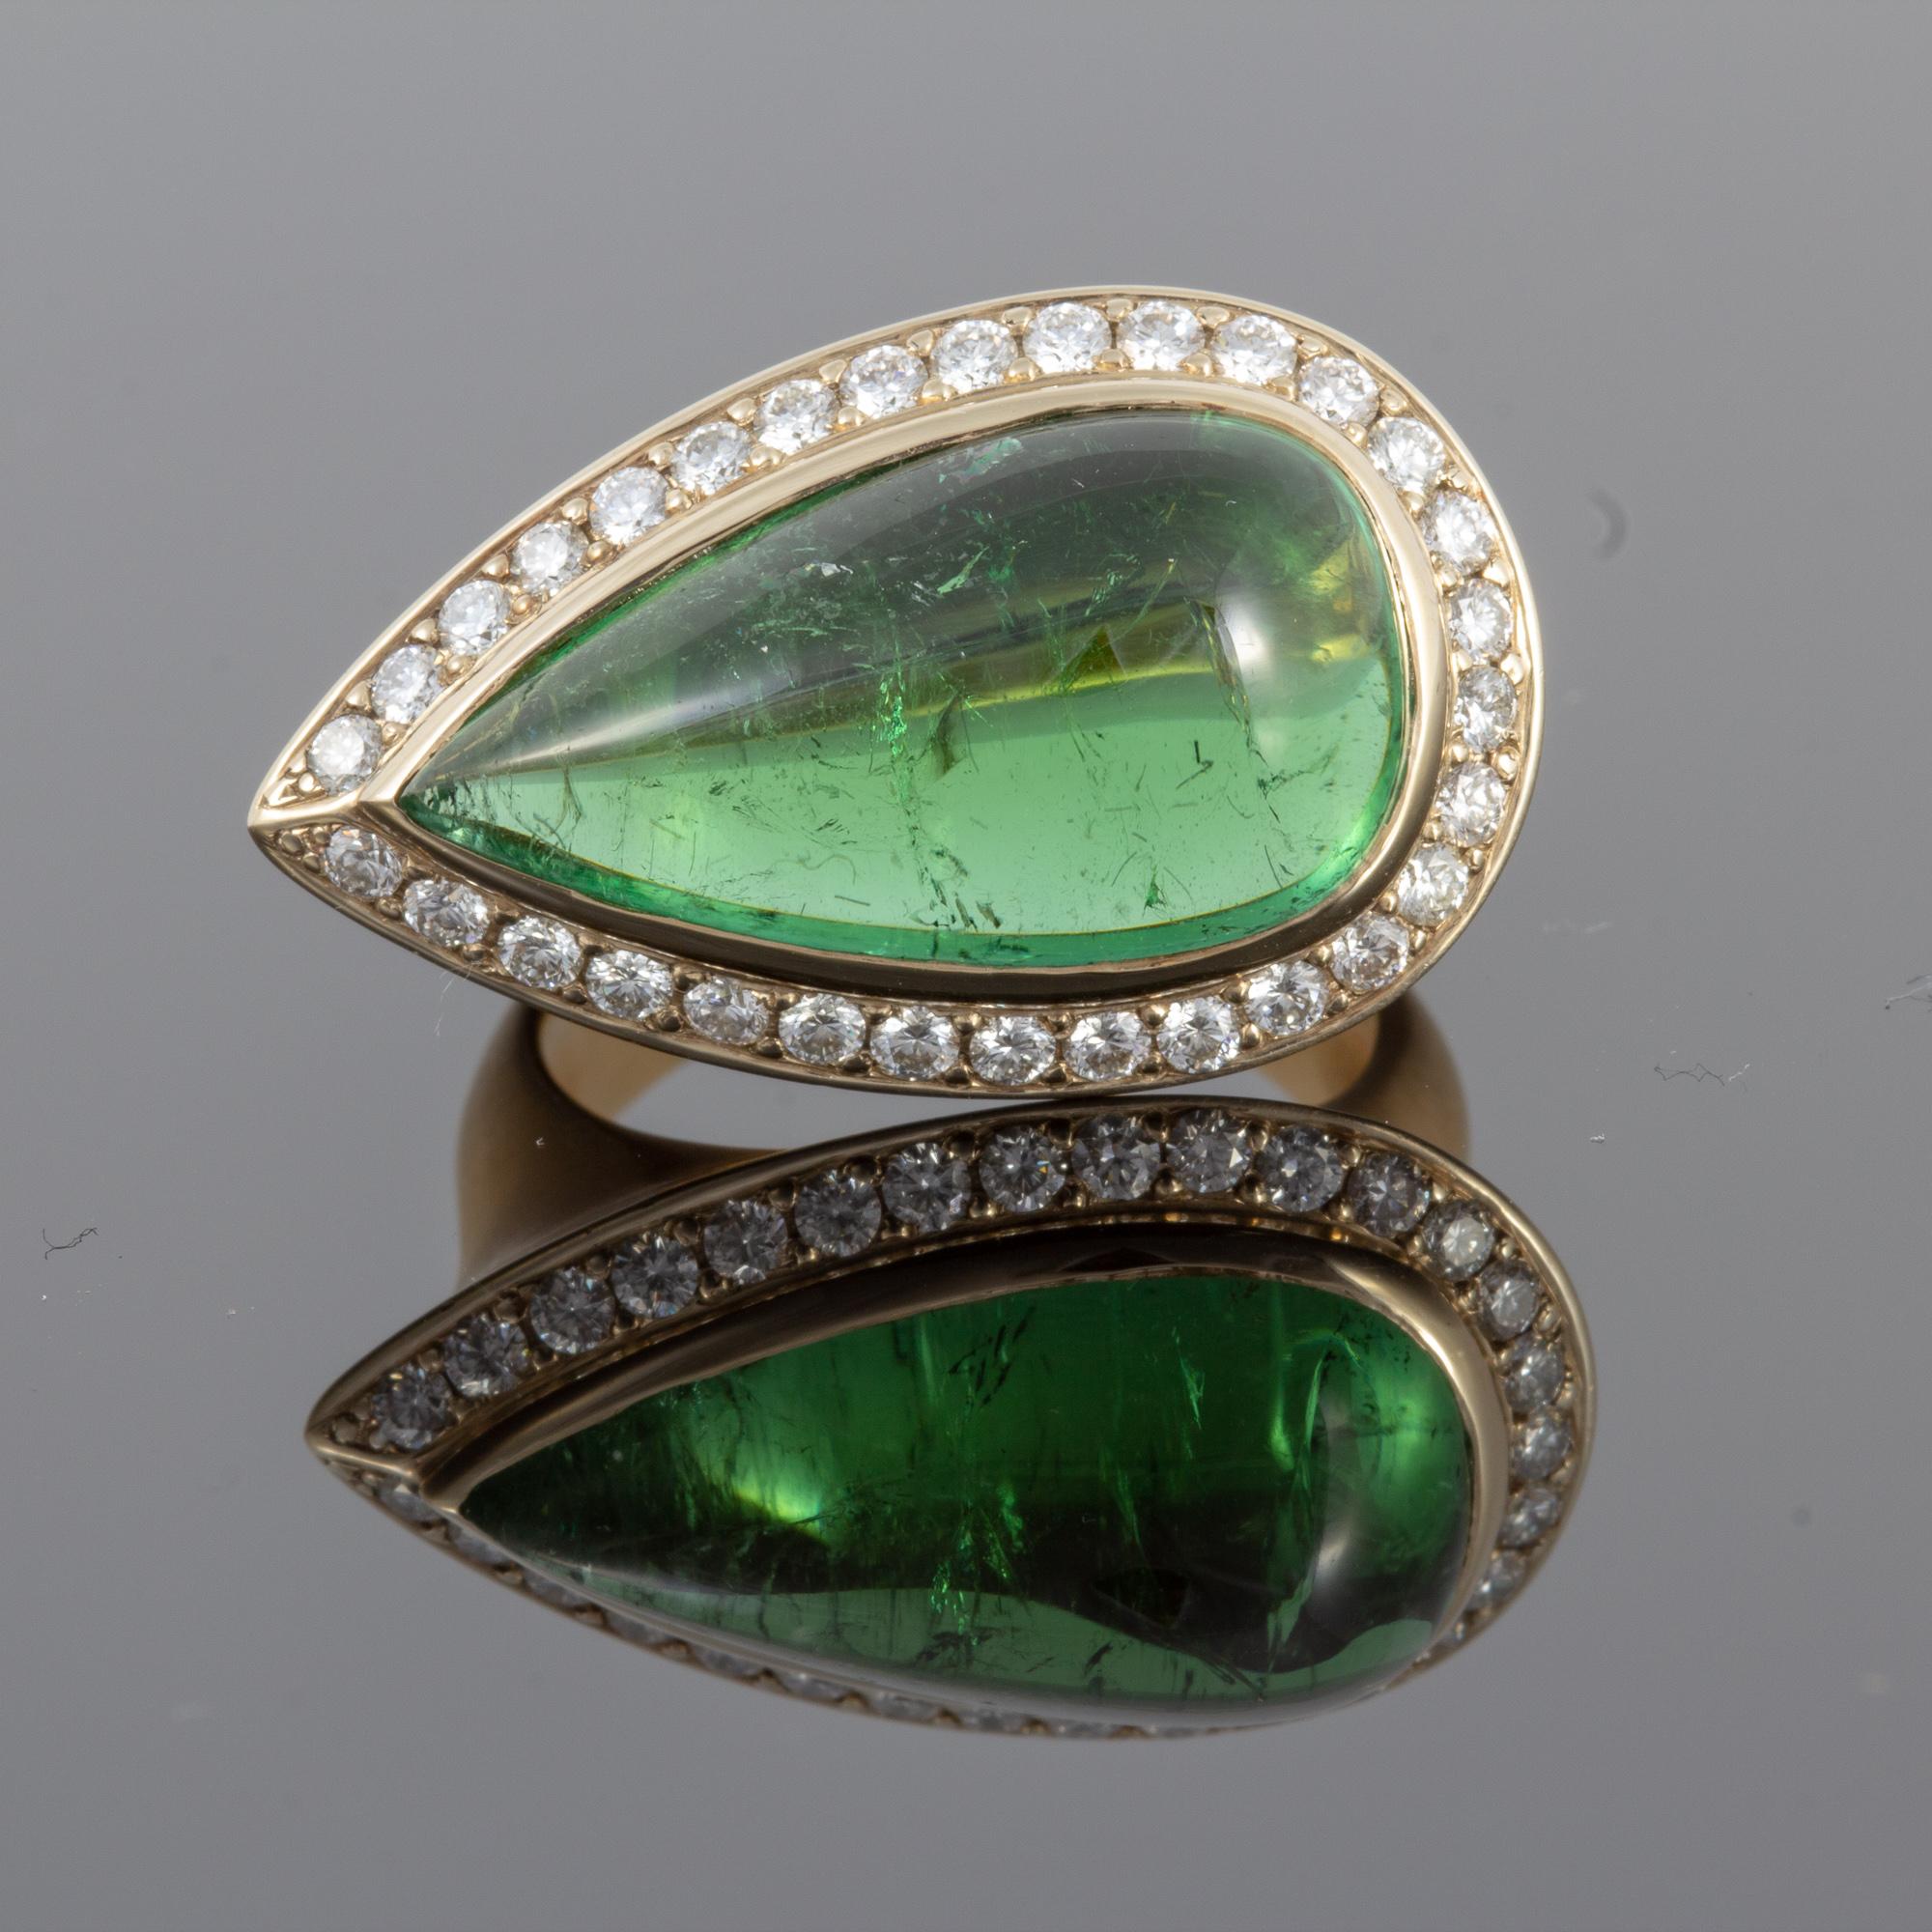 Exquisite 12.4 carat Green Tourmaline Cabochon Ring set in 18 karat Gold For Sale 1